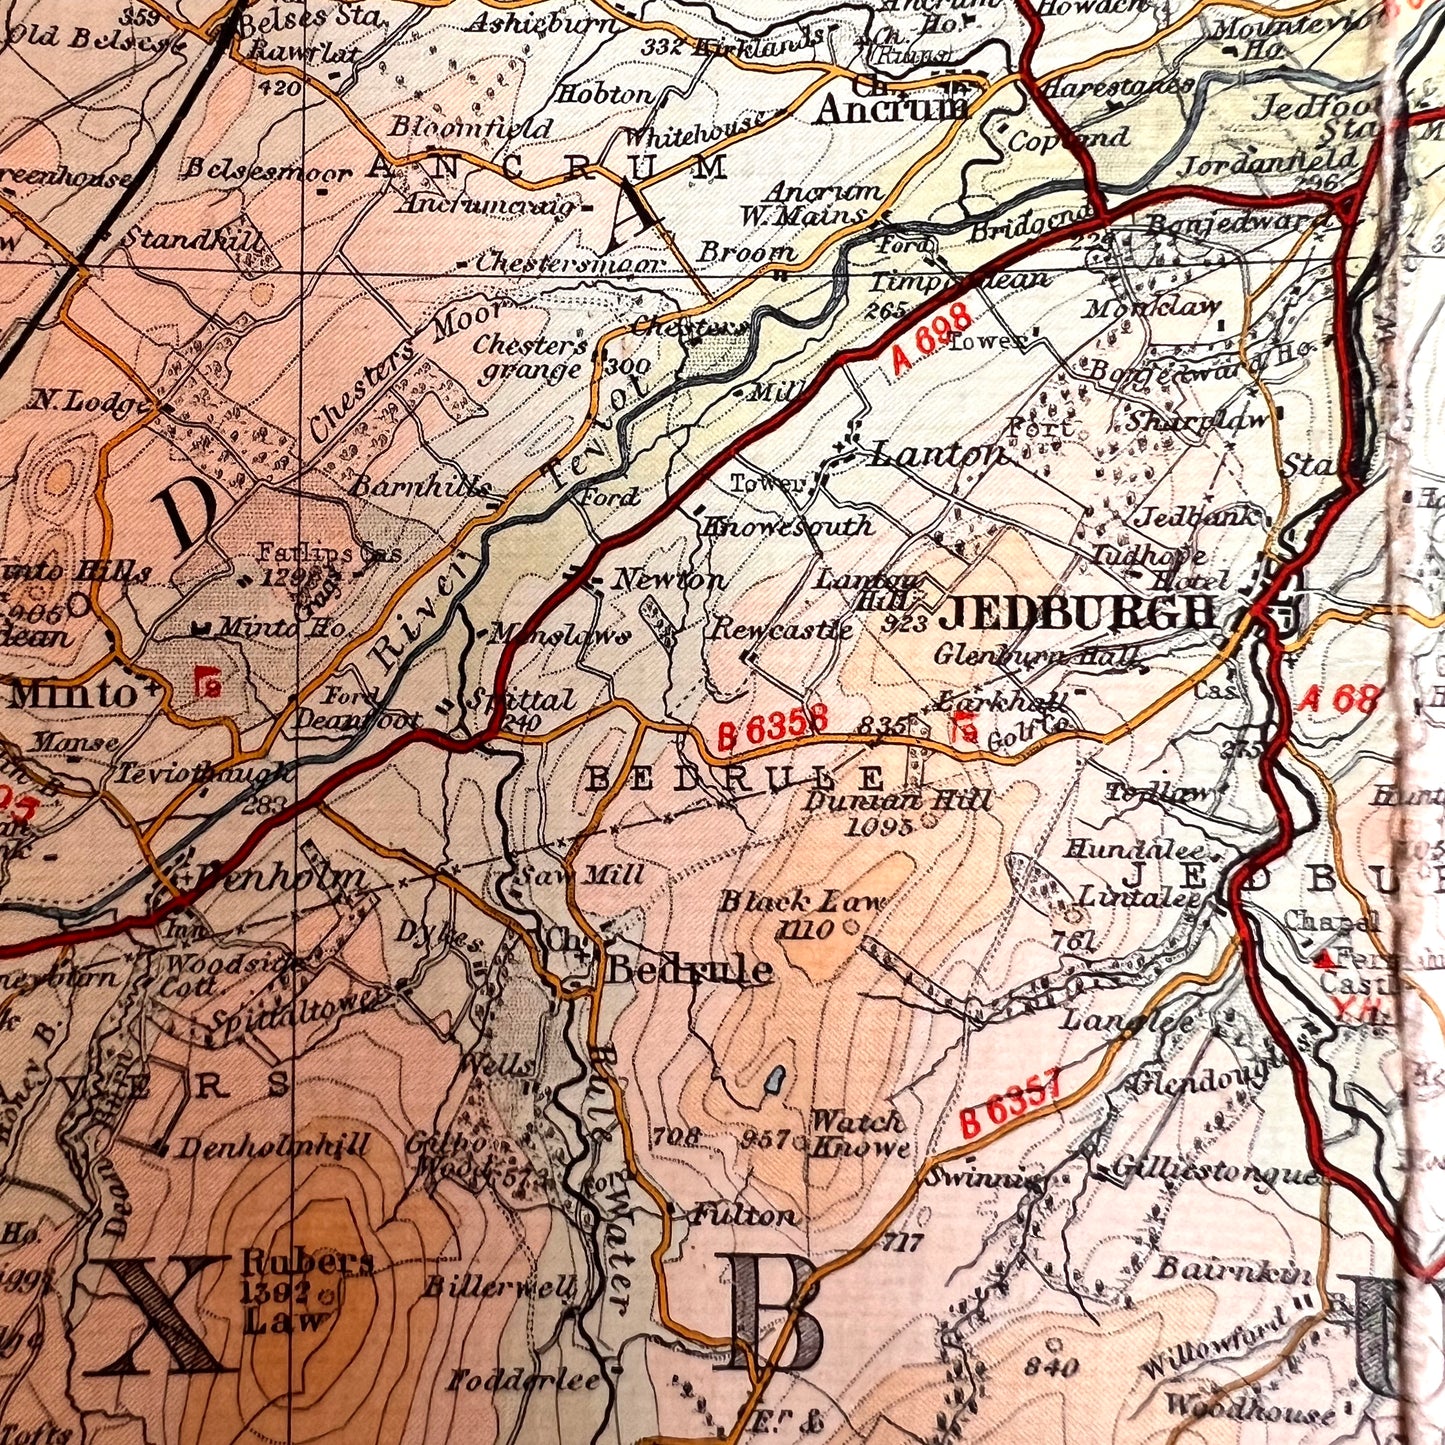 1950s Bartholomew's Map of Tweedale Sheet 41 on Cloth Selkirk, Jedburgh, Hawick